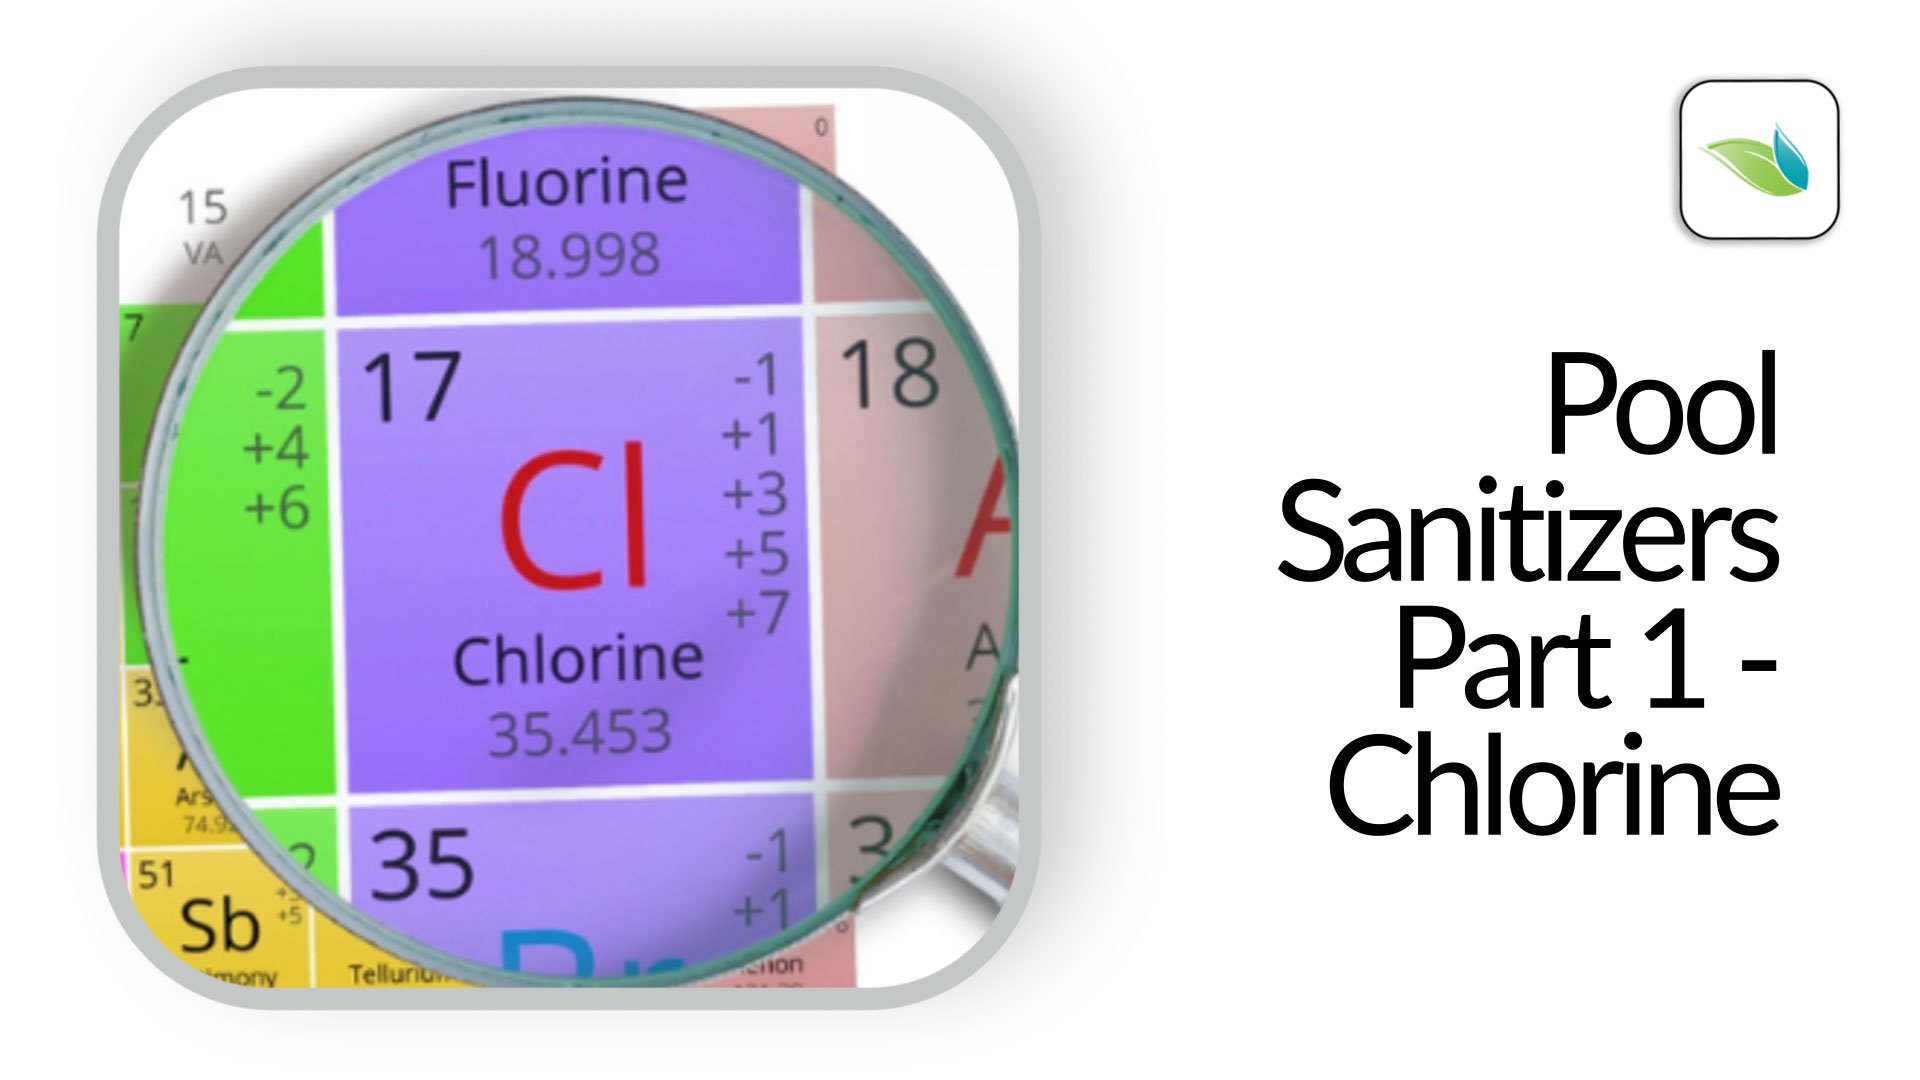 Pool Sanitizers, Part 1: Chlorine